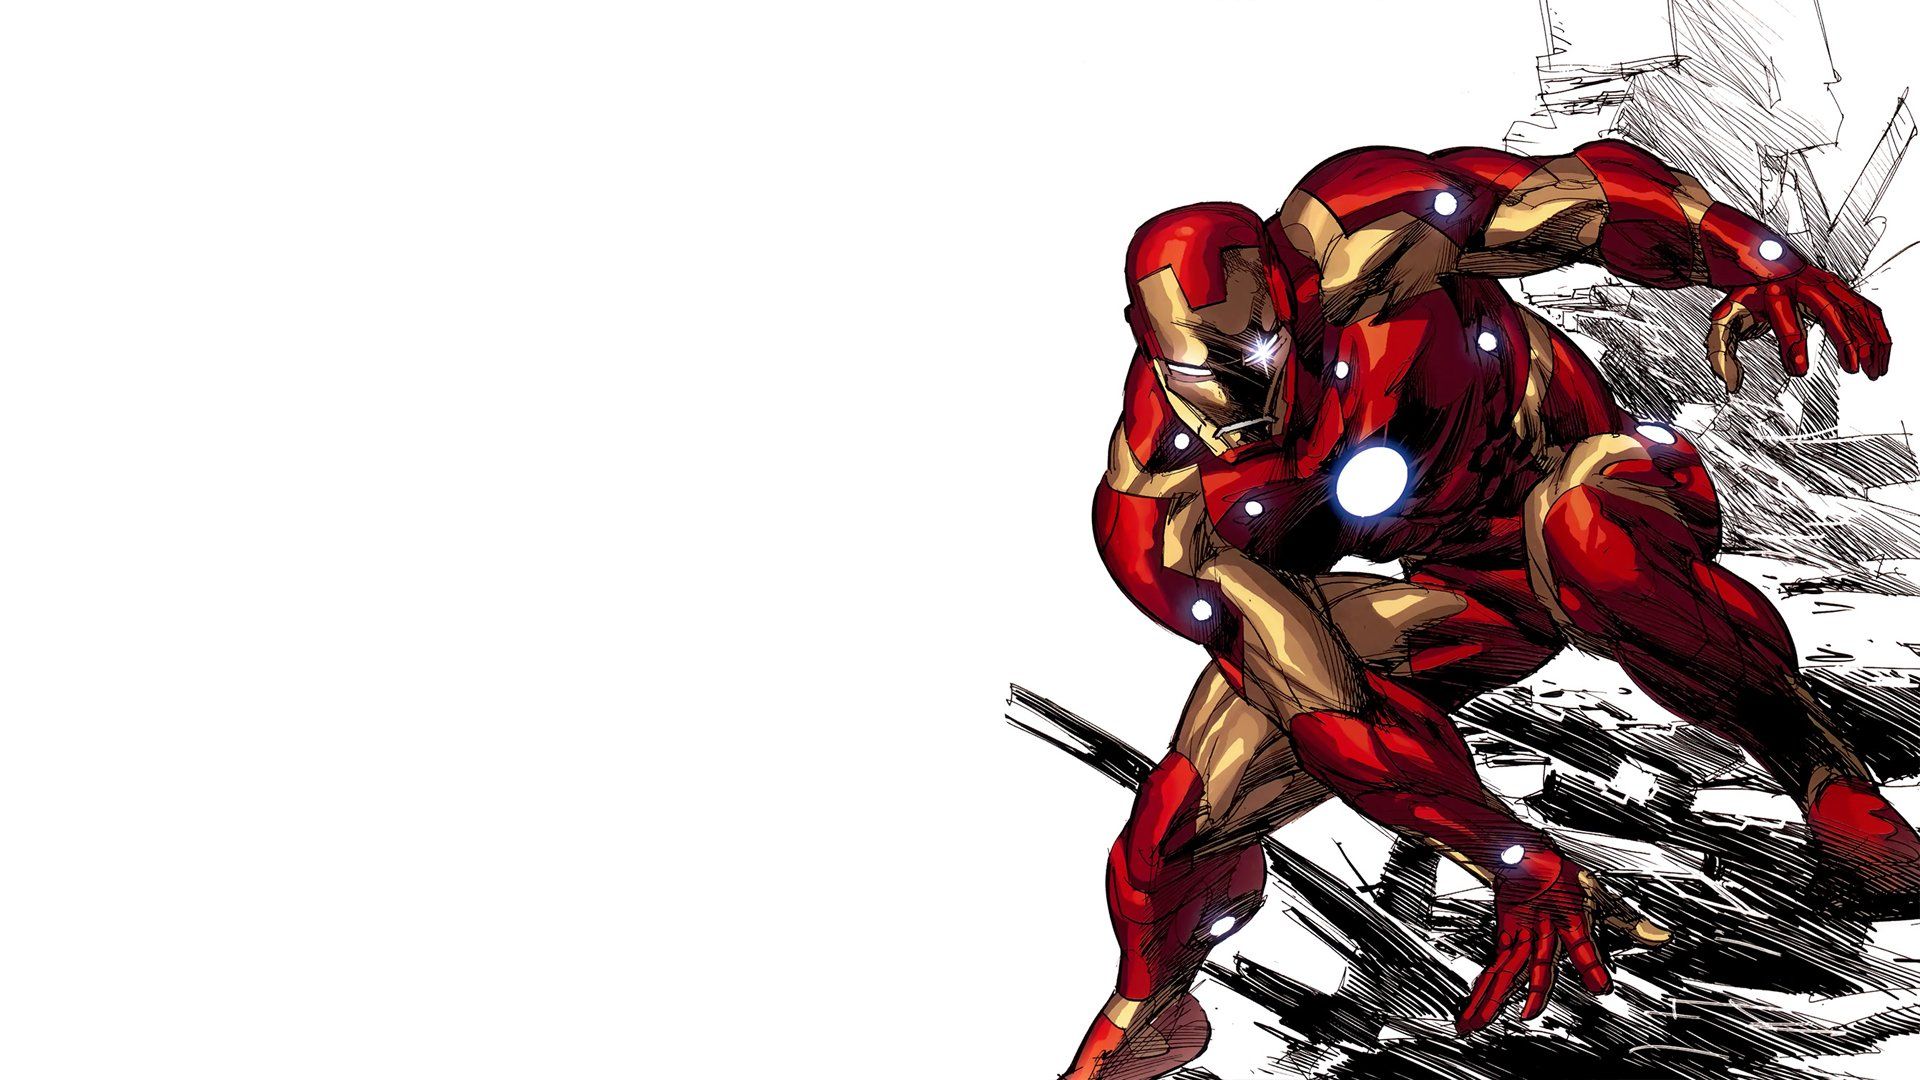 Iron Man Comic Cartoon Wallpapers | Wallpapers, Backgrounds ...